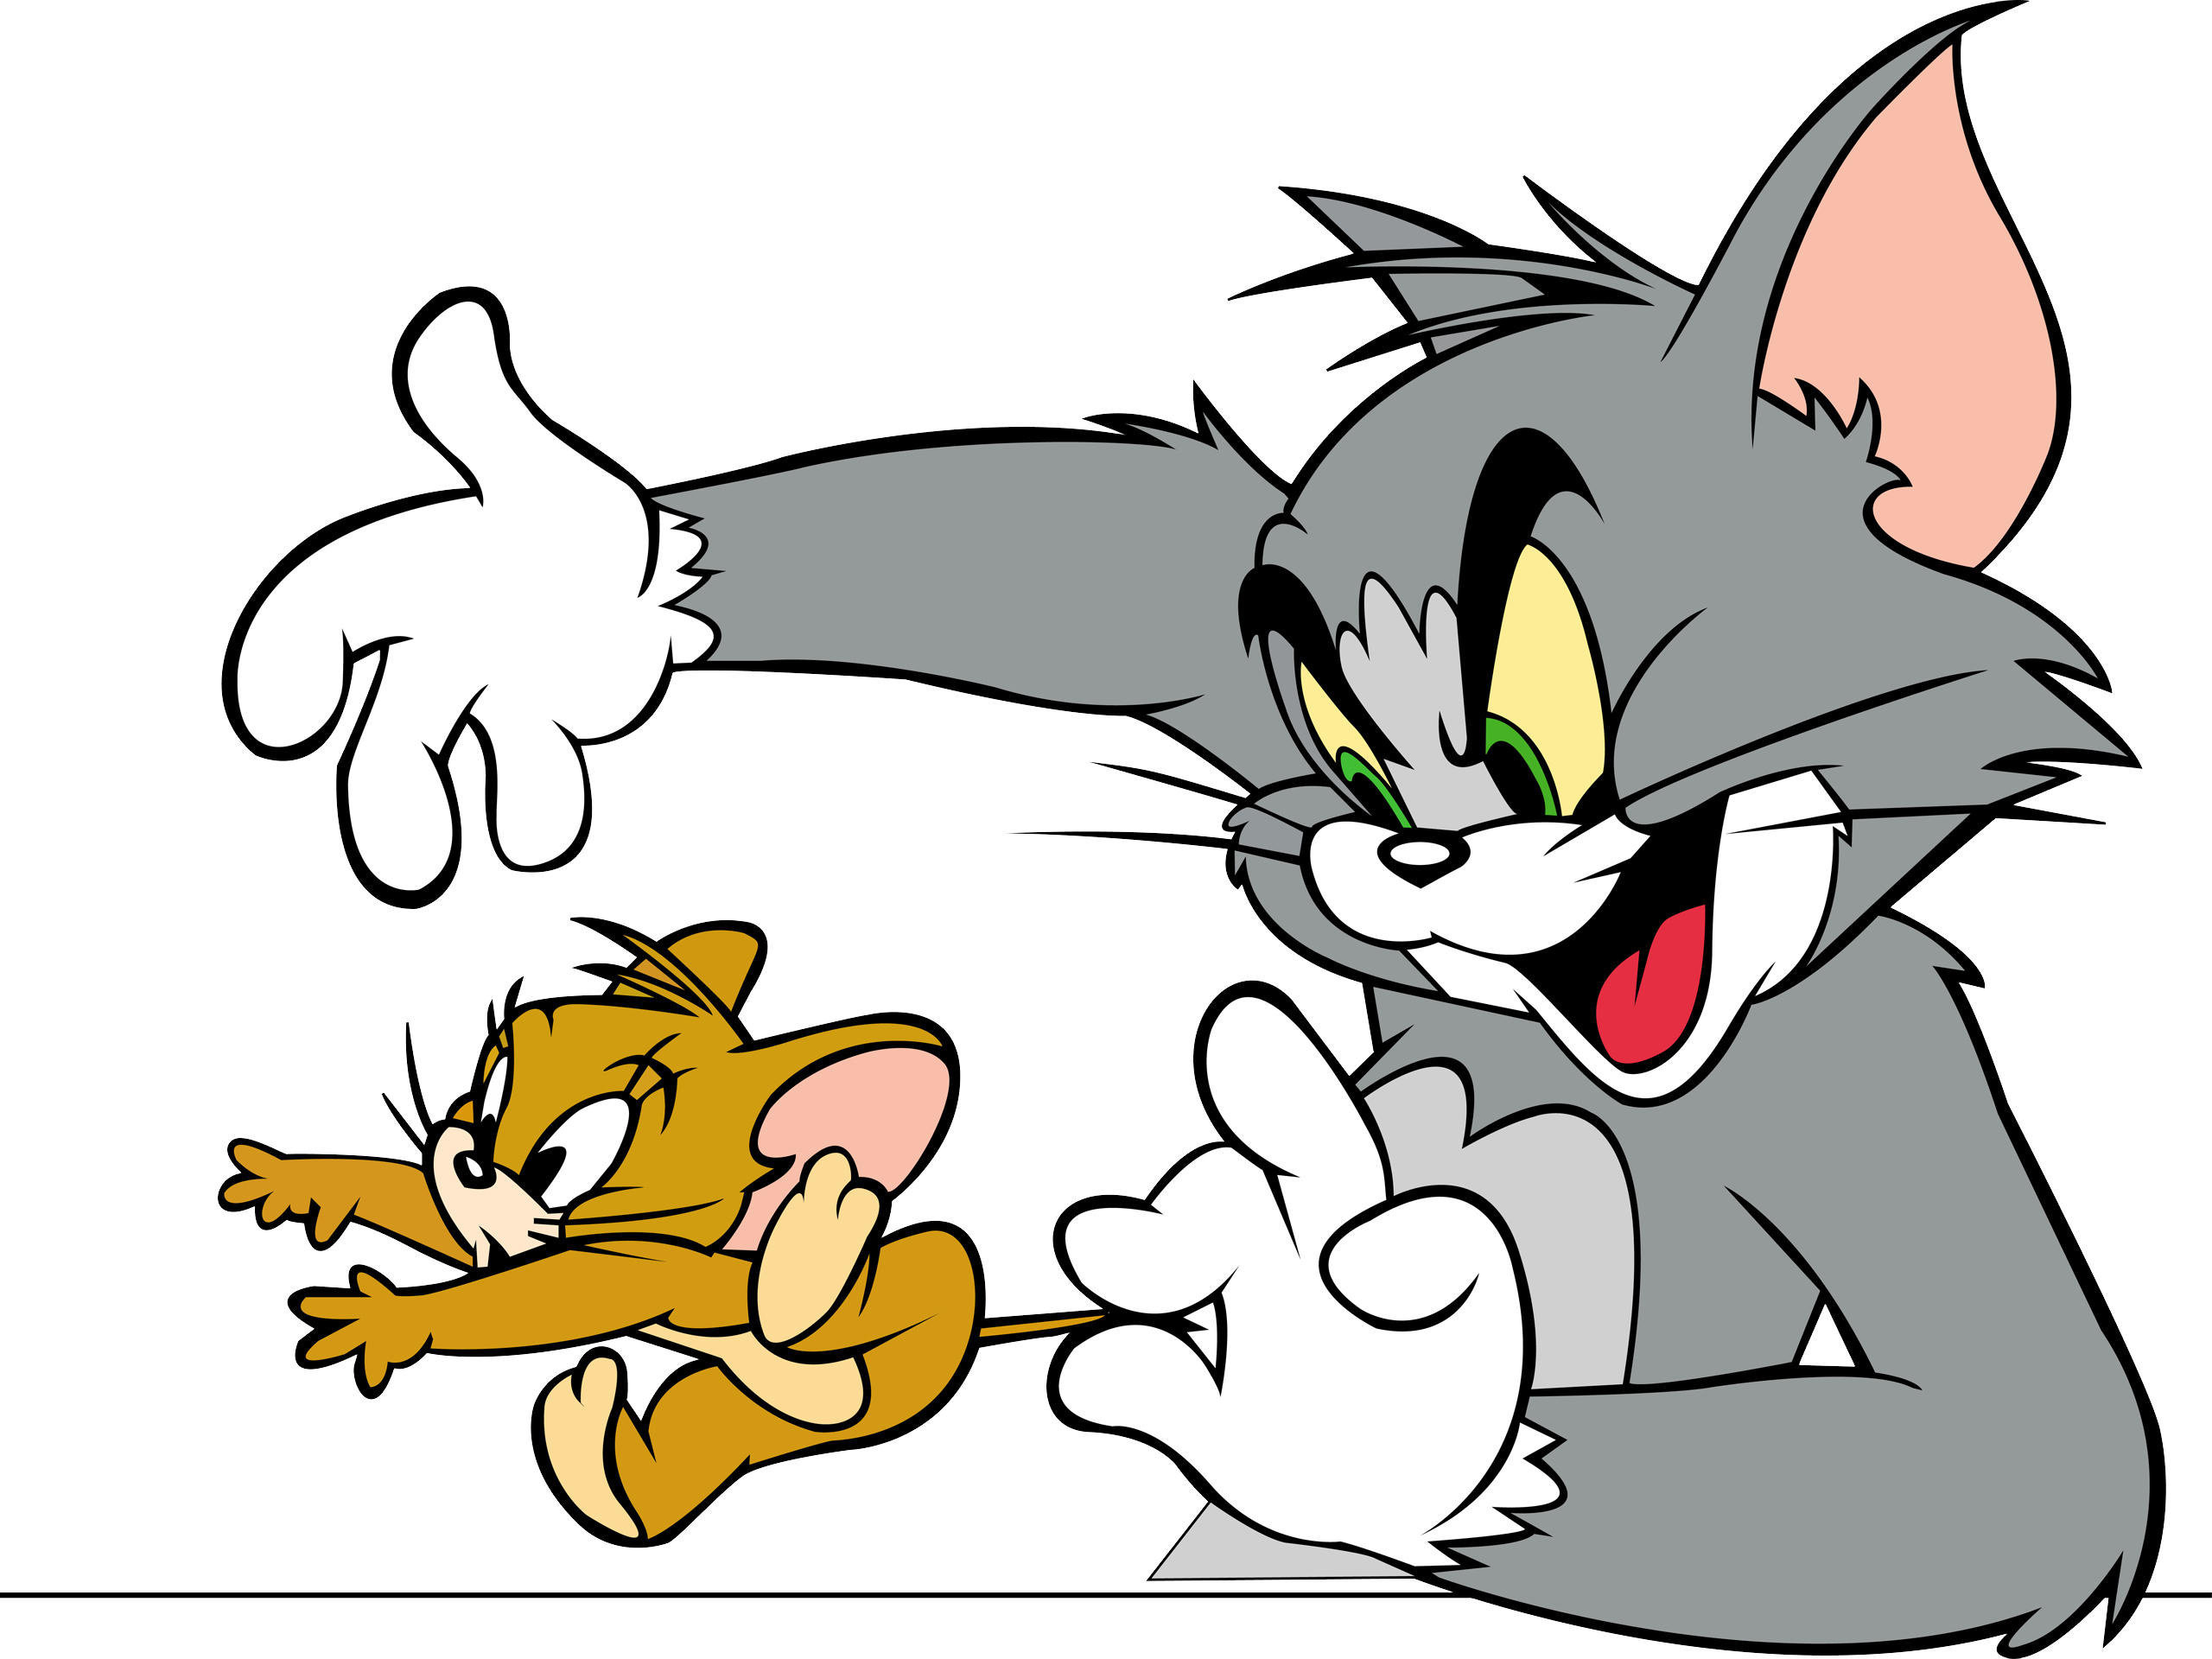 Jerry том и джерри. Tom and Jerry. Том и Джерри том и Джерри. Мультяшные том и Джерри. Кот том и Джерри.